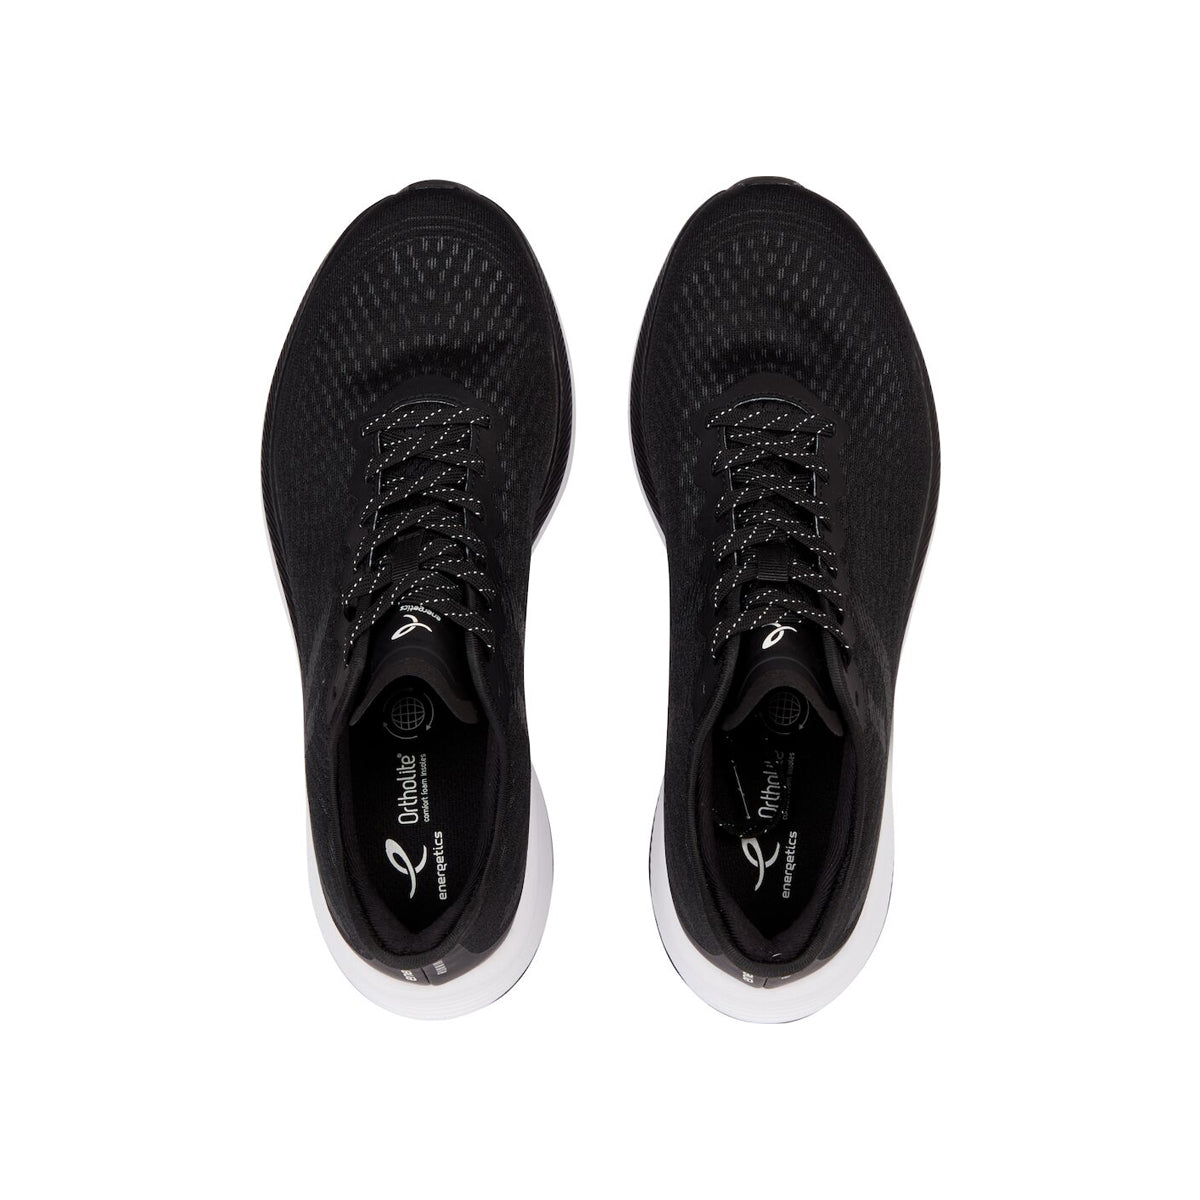 Energetics OZ 2.4 M Running Shoes For Men, Black